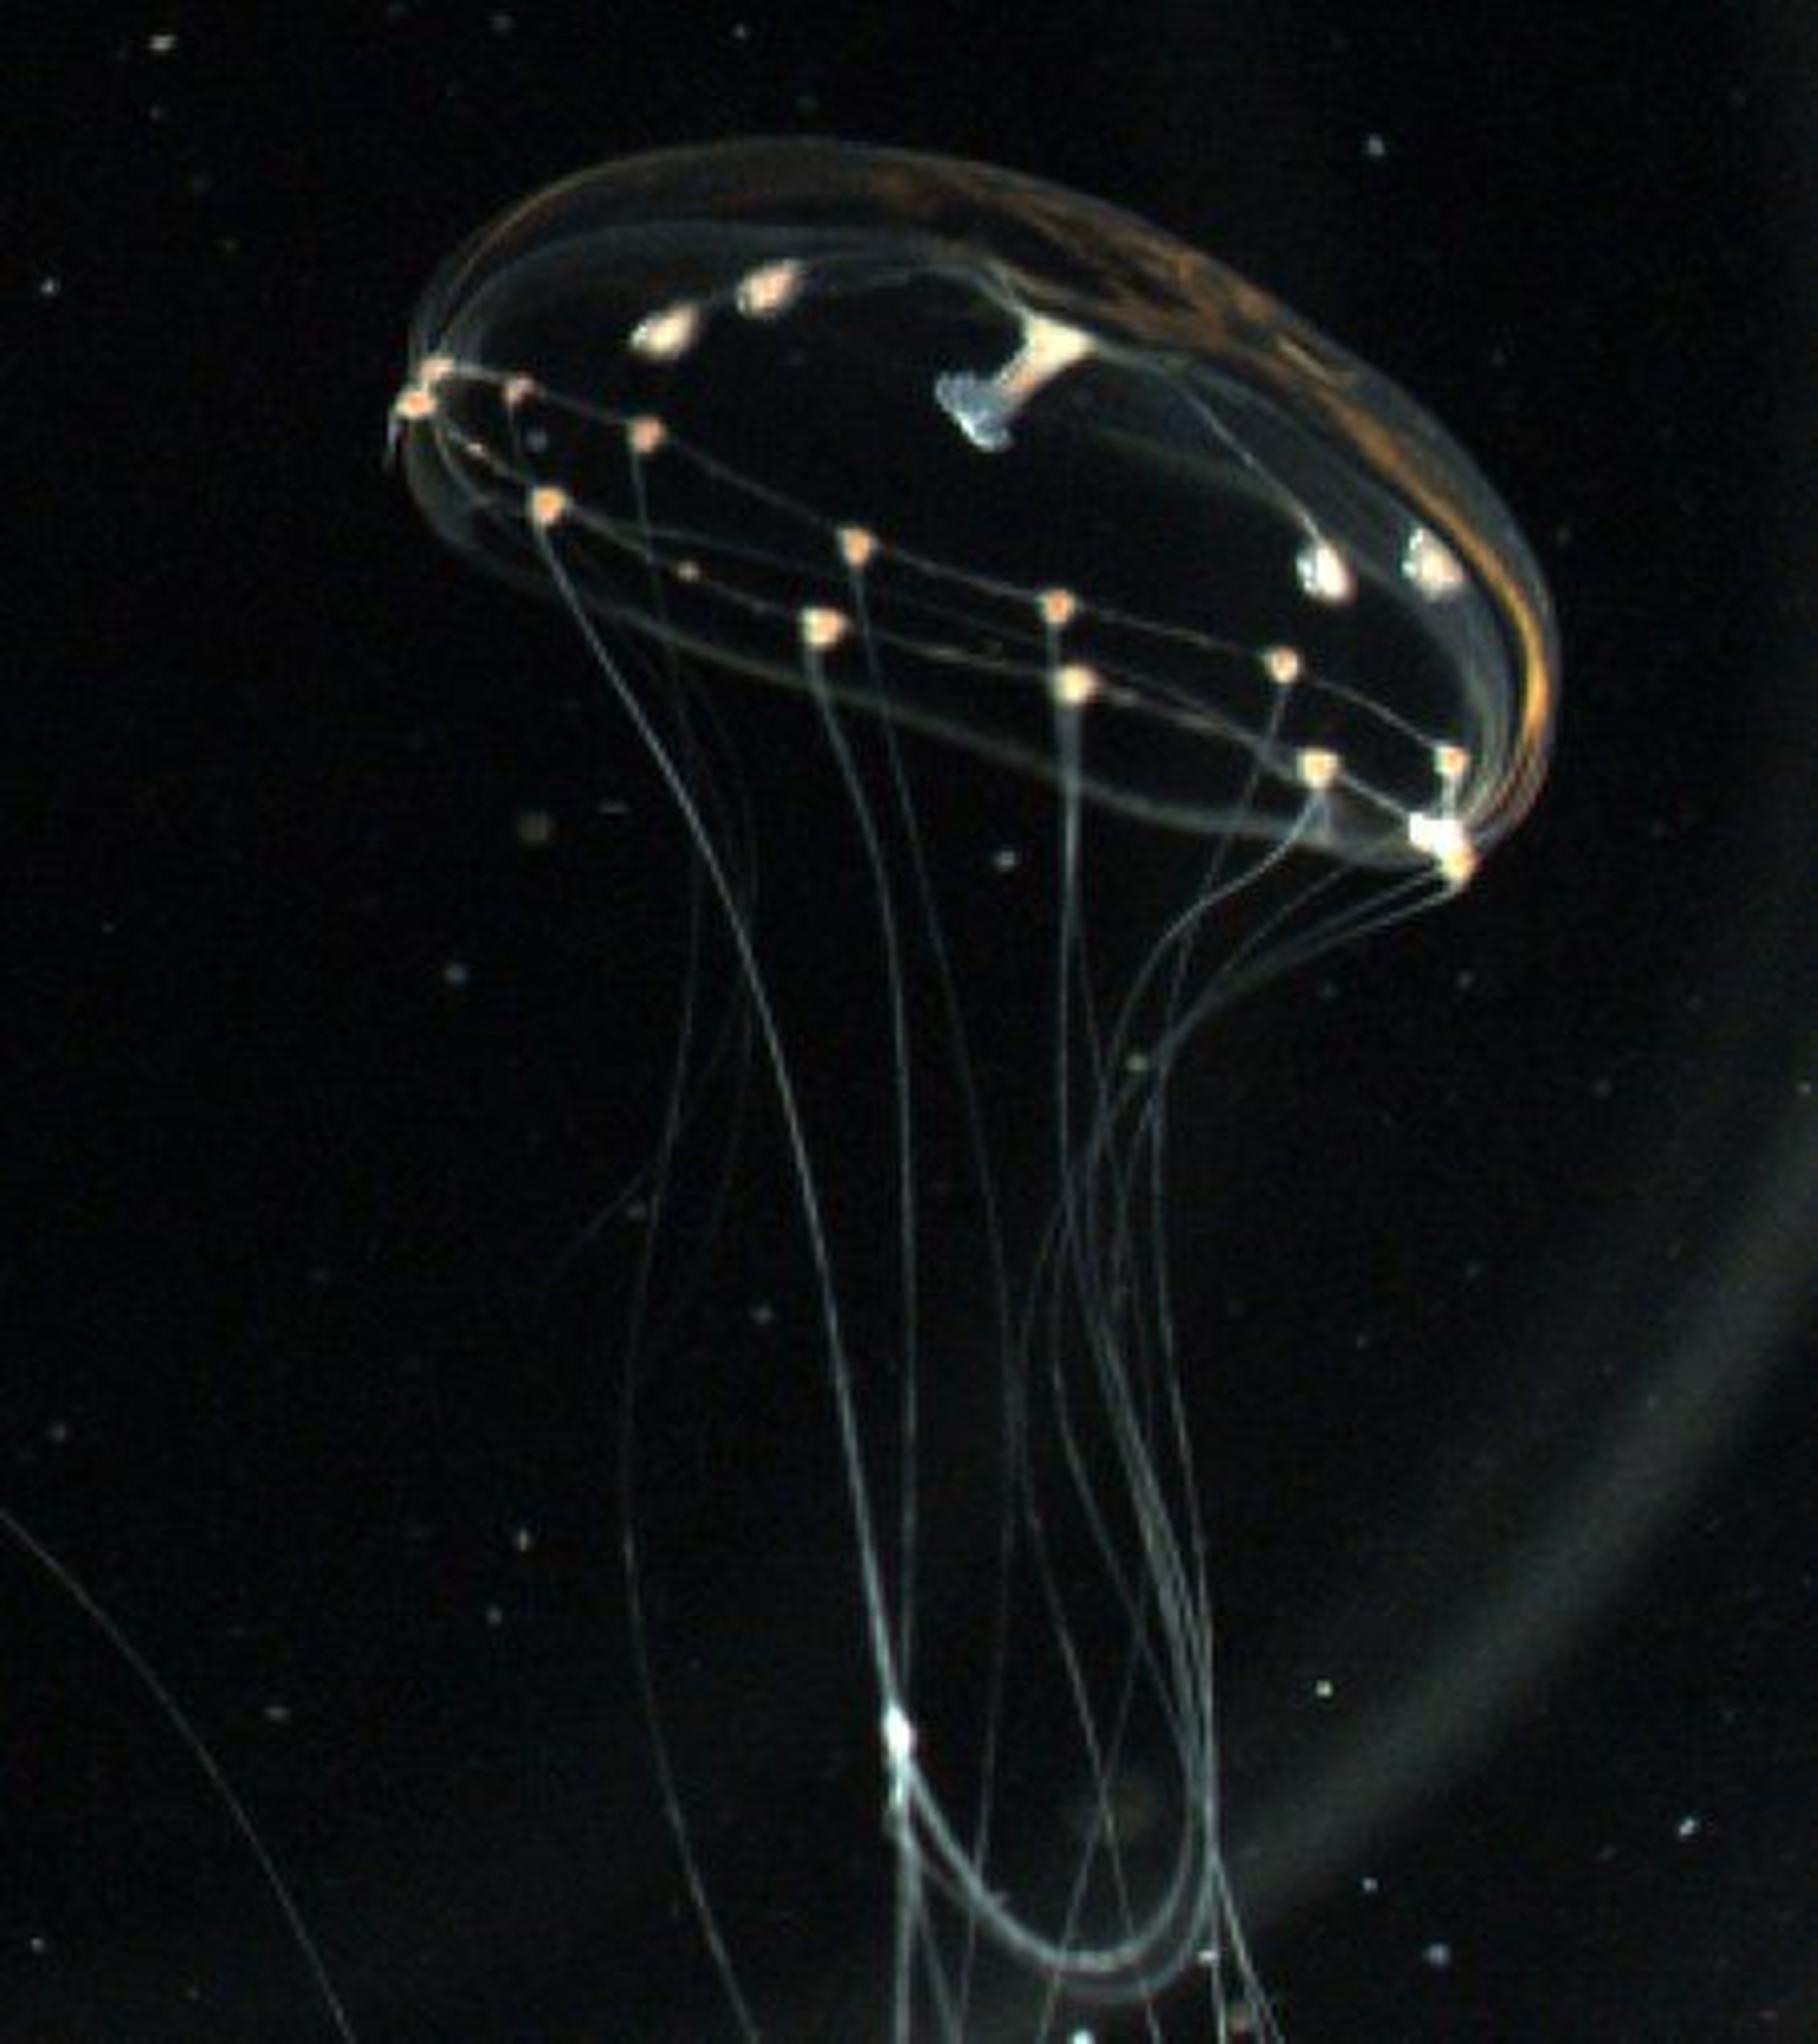 Clytia hemisphaerica, medusa, desde el lateral.